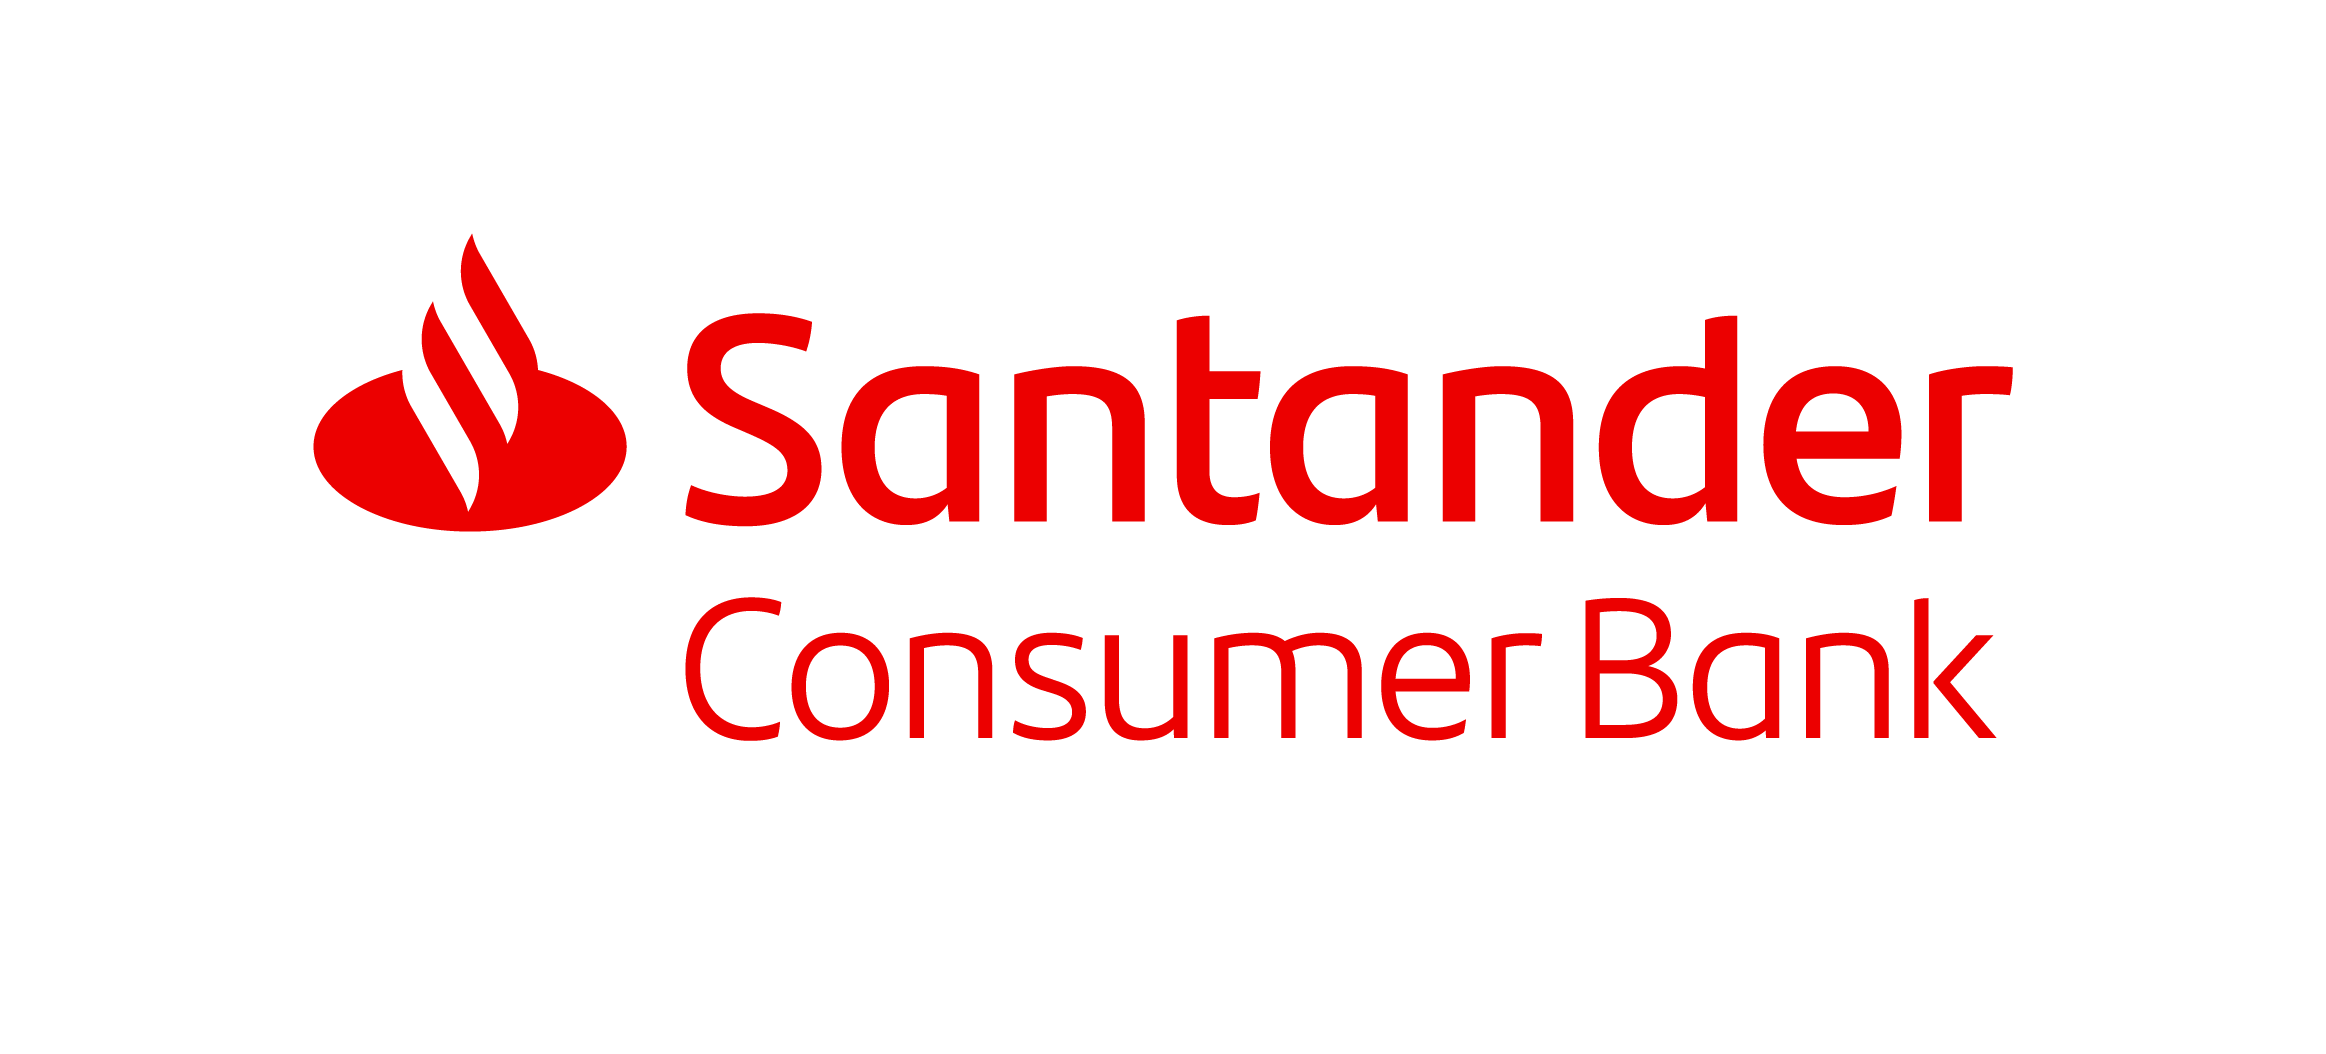 Santander Consumer Bank lanceert nieuwe hoogrentende spaarrekening